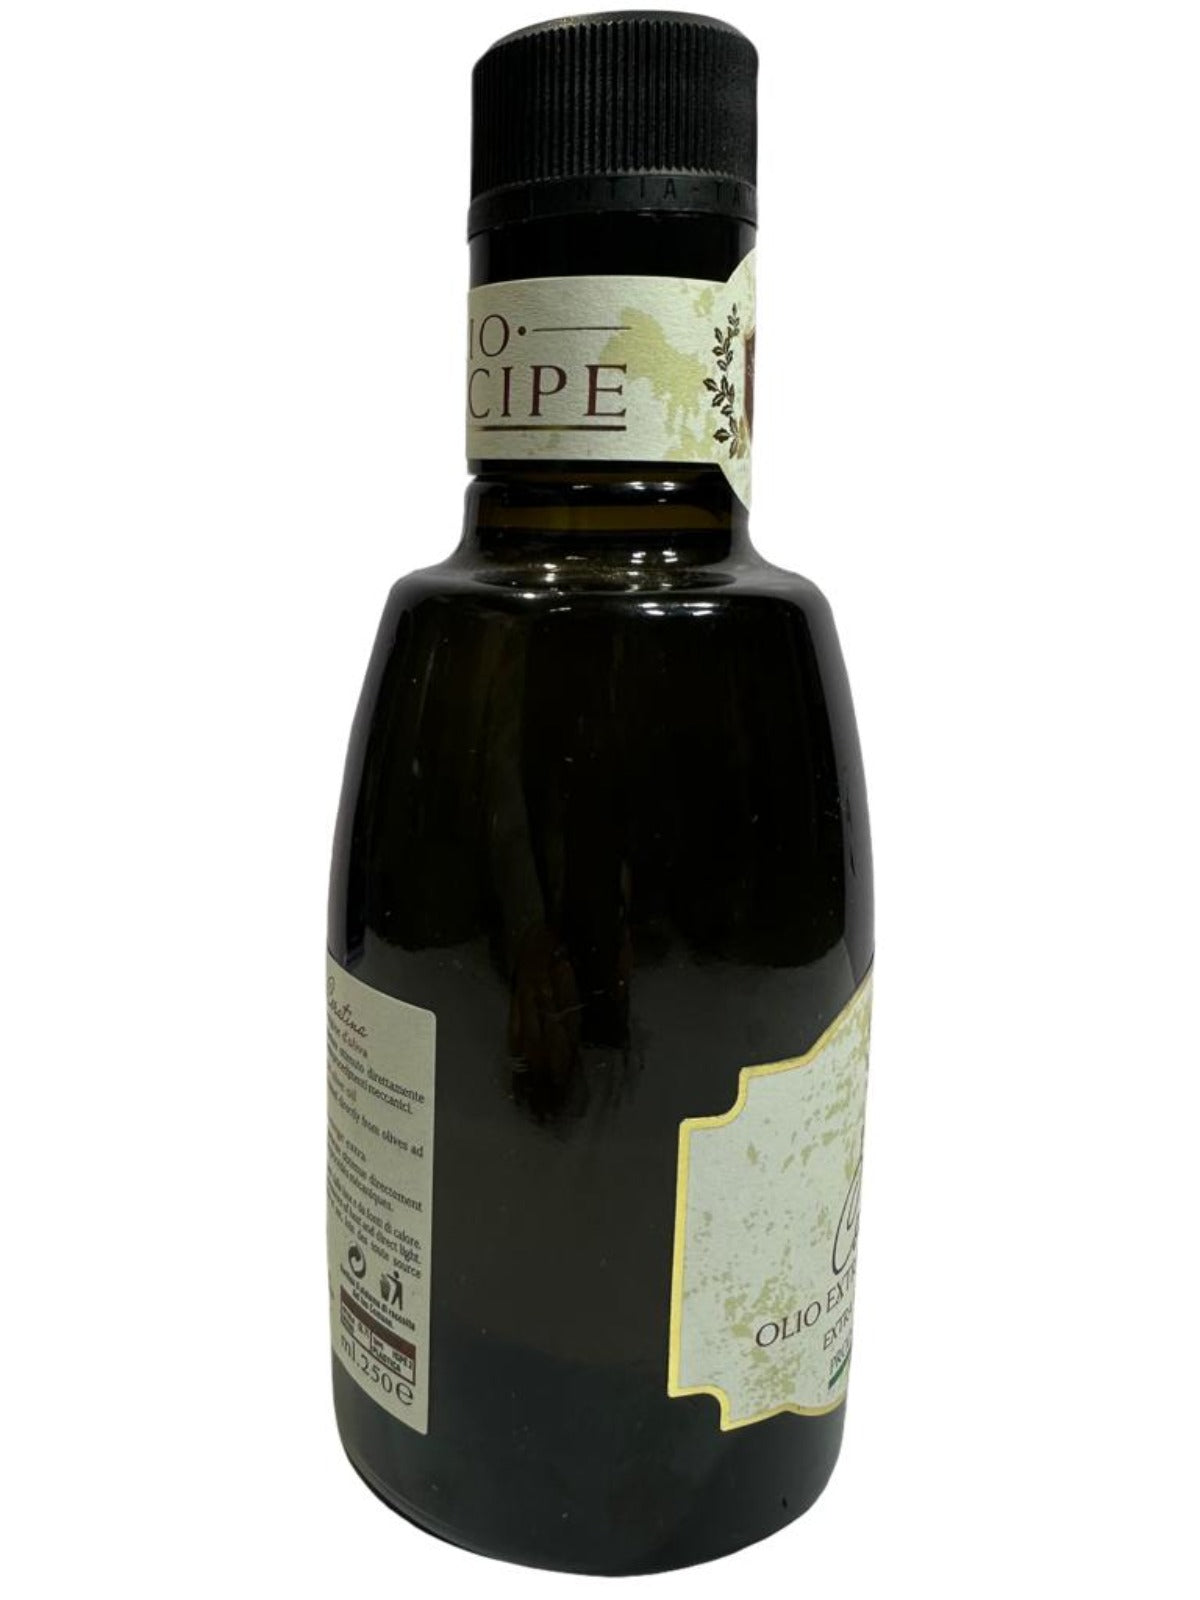 Olio Principe Sicilian Extra Virgin Olive Oil Coratina 250ml